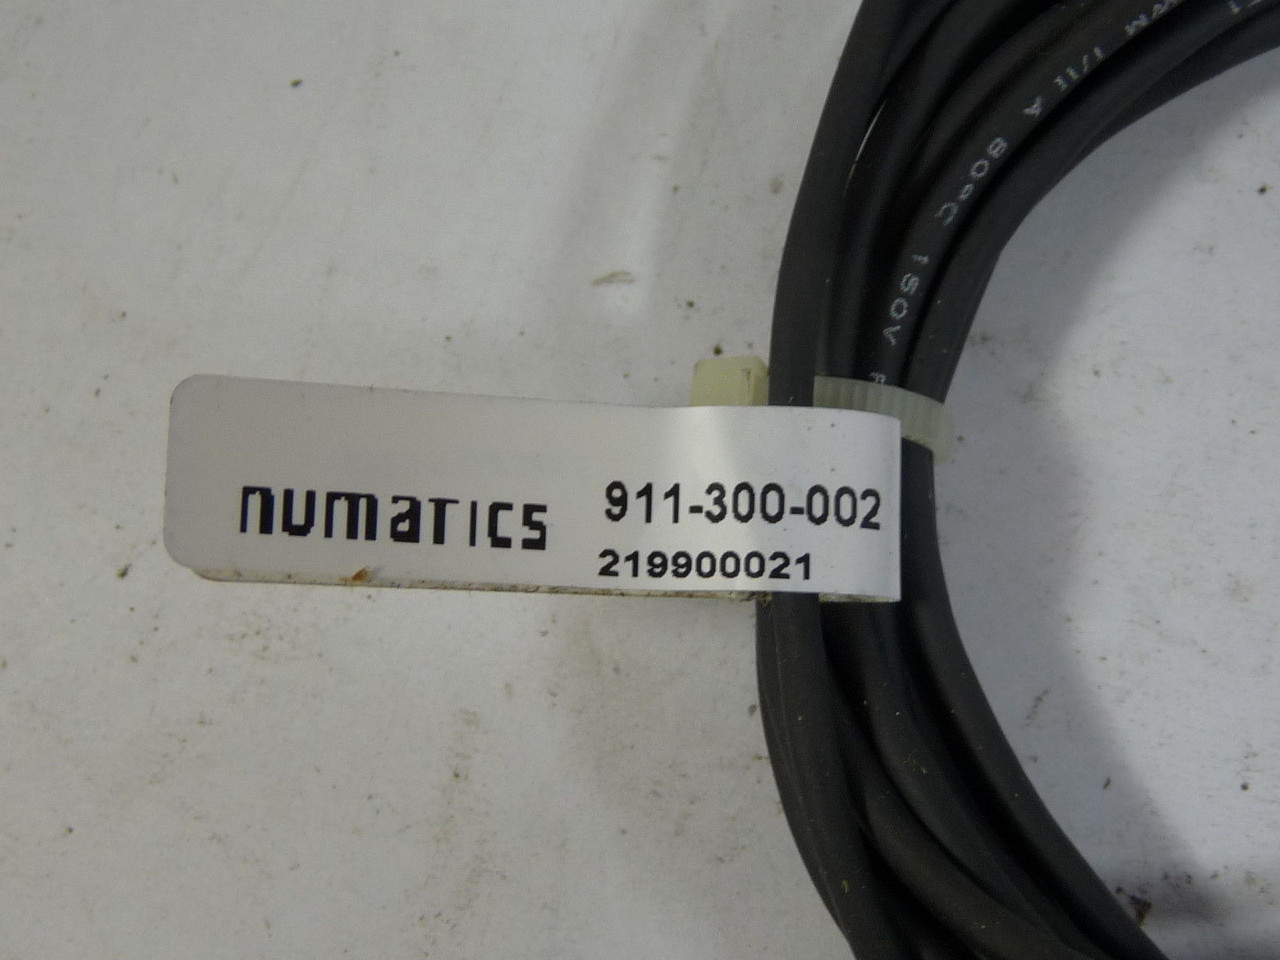 Numatics 911-300-002 Proximity Sensor USED